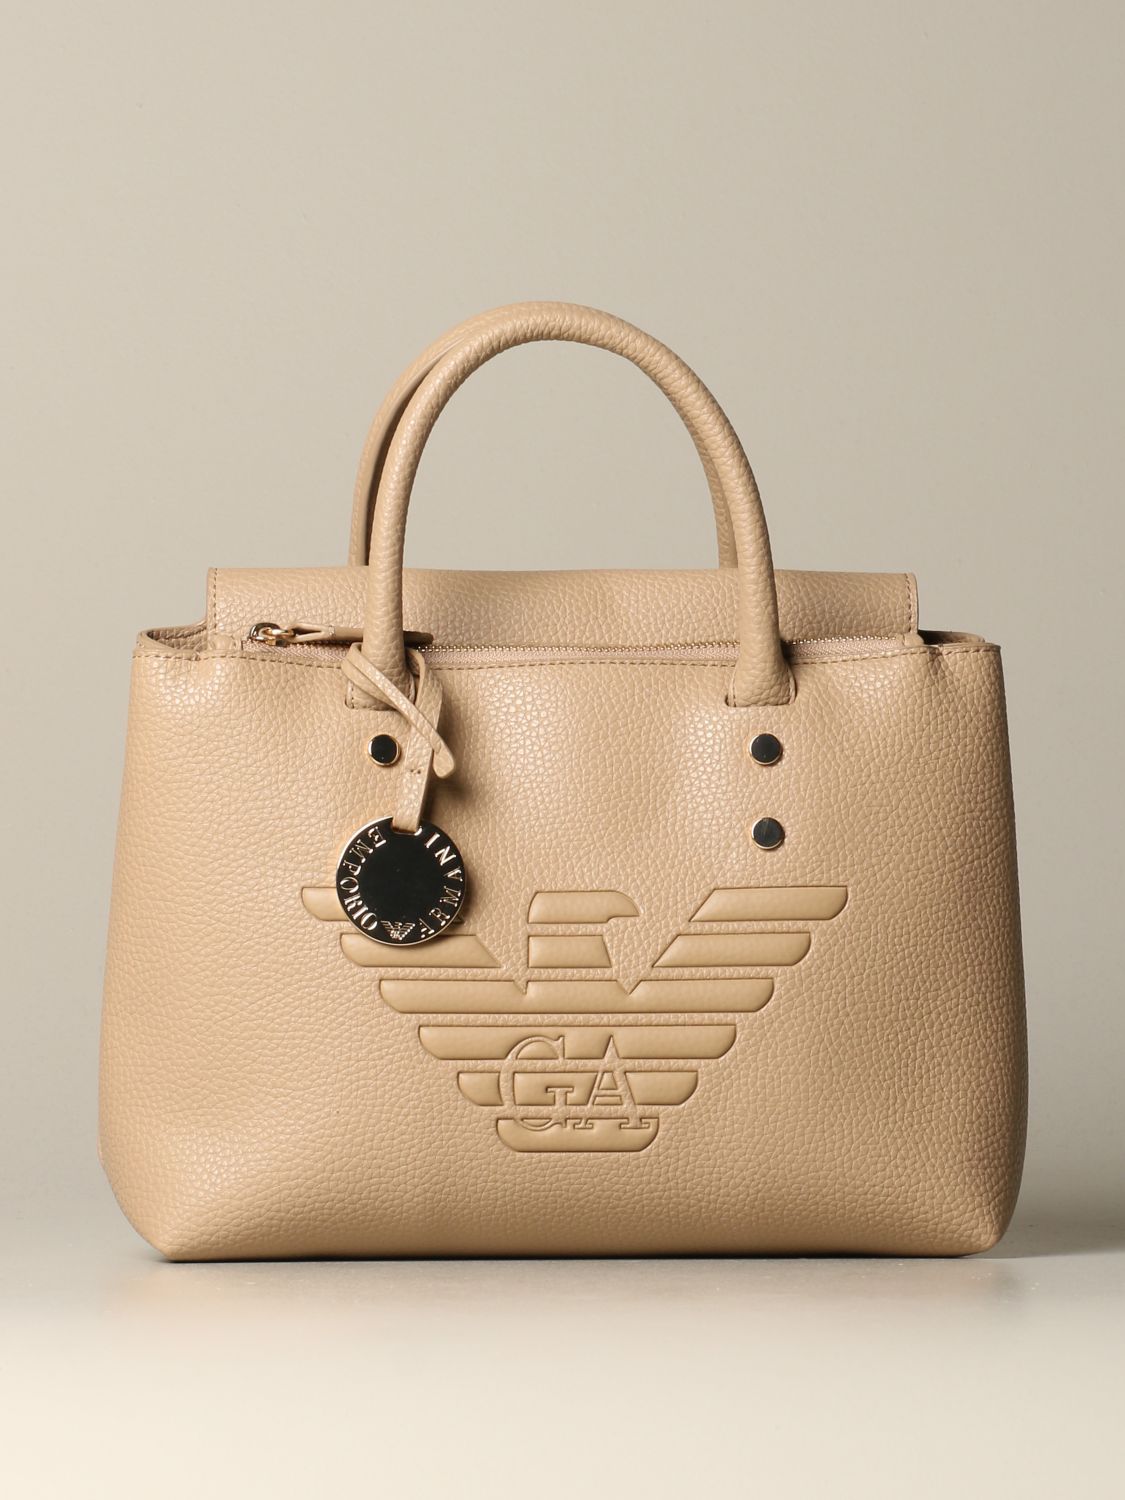 Emporio Armani Outlet: mini bag for woman - Beige | Emporio Armani mini bag  Y3D144 YGF8B online on 